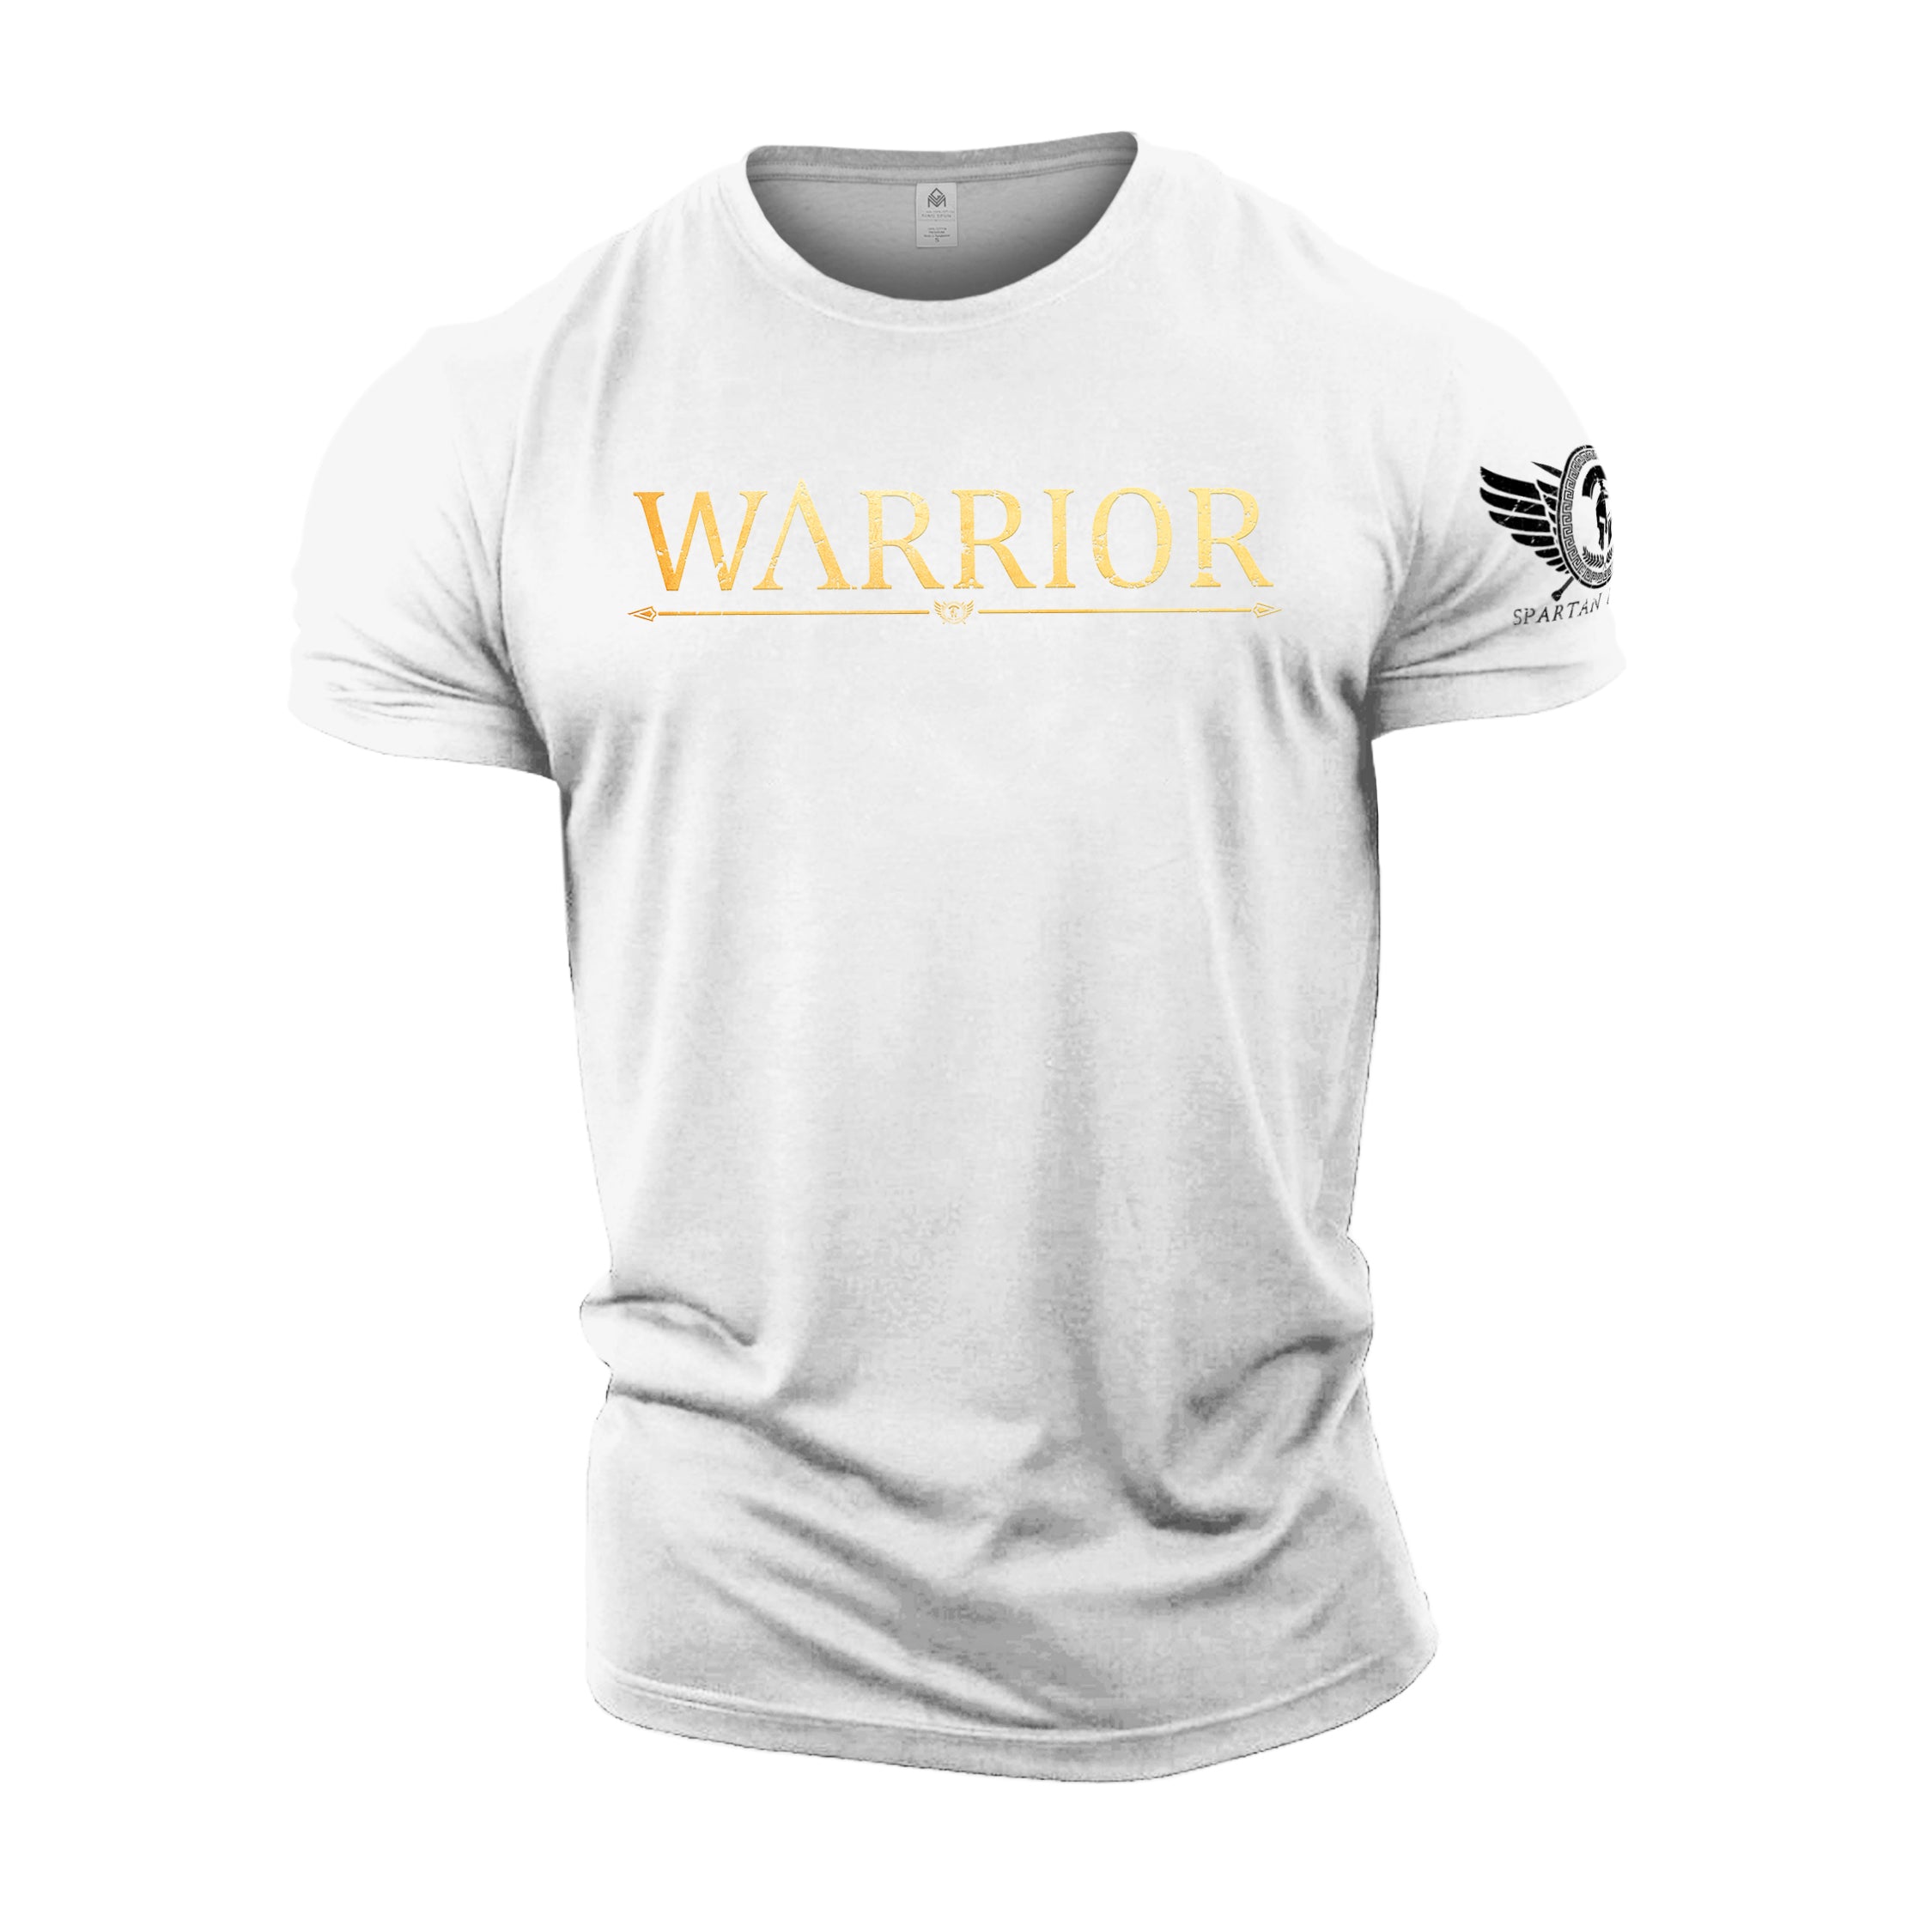 Warrior Gold - Spartan Forged - Gym T-Shirt